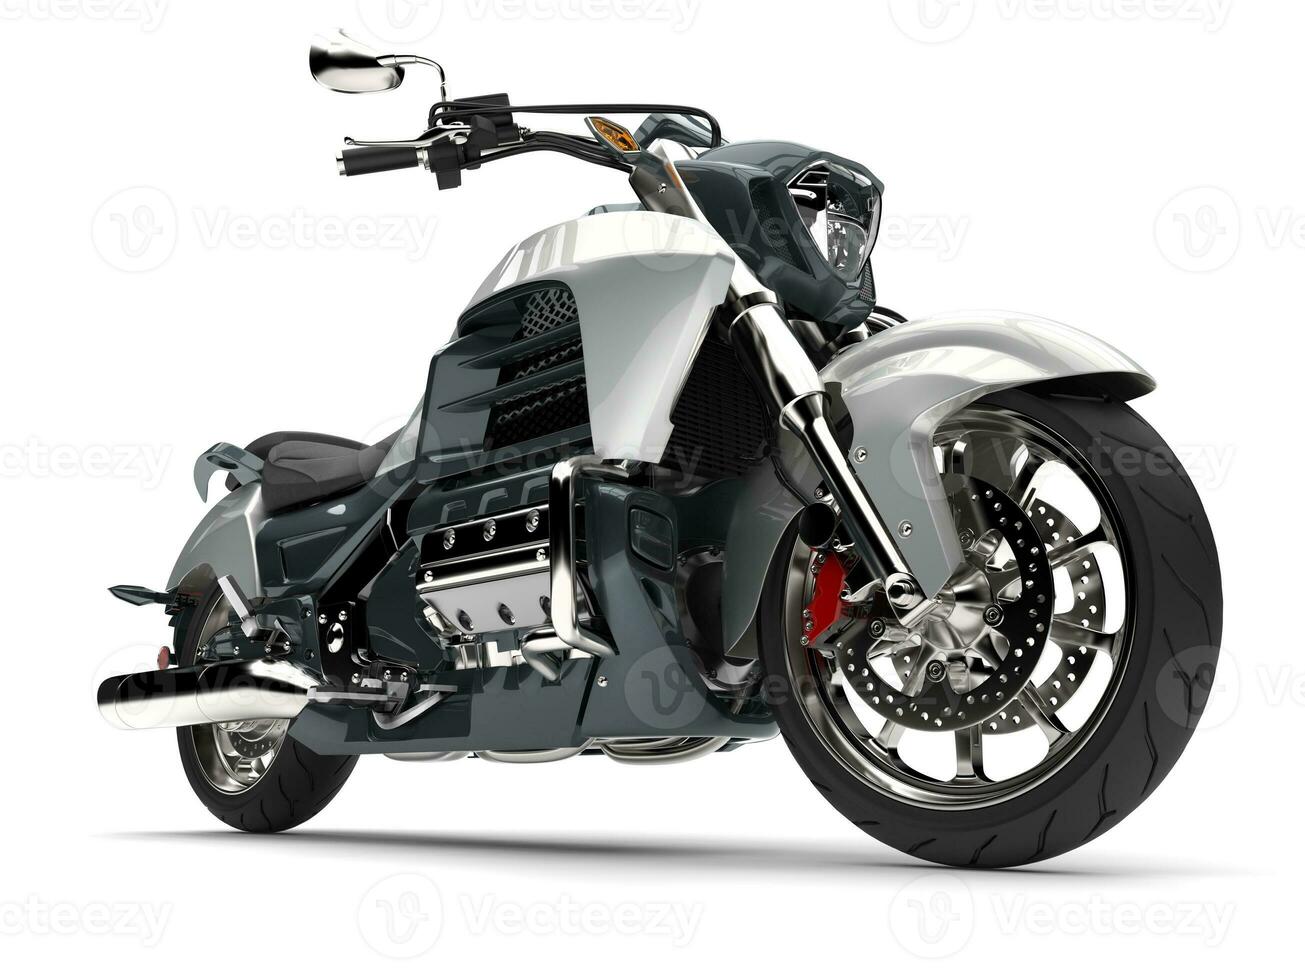 metallico ardesia grigio e argento moderno potente motociclo foto